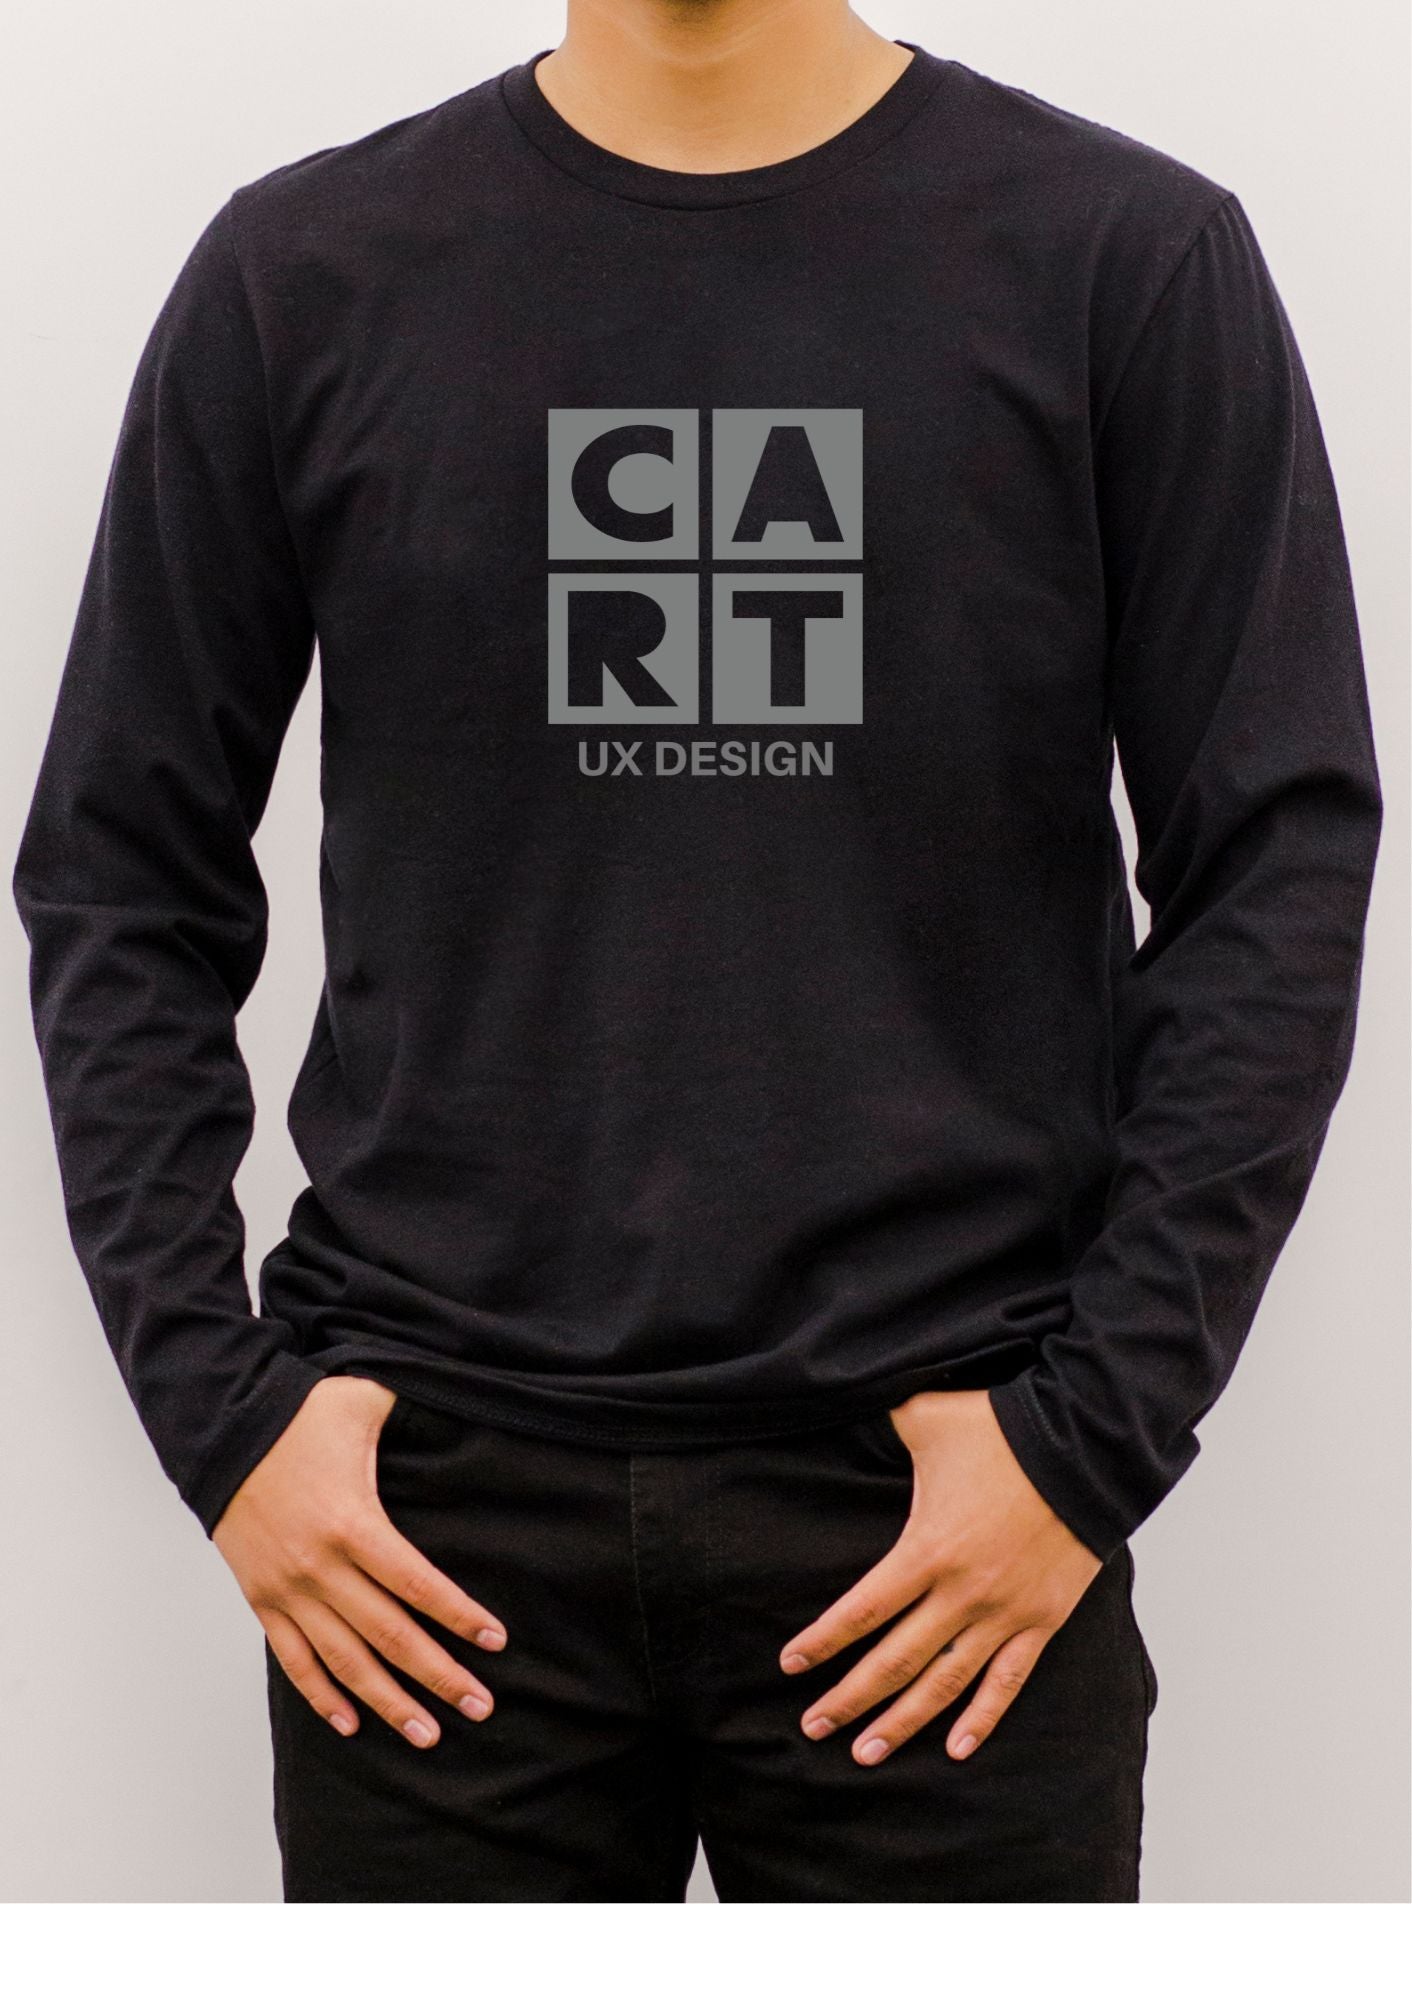 Long Sleeve t-shirt (Unisex fit) - UX Design black / grey logo